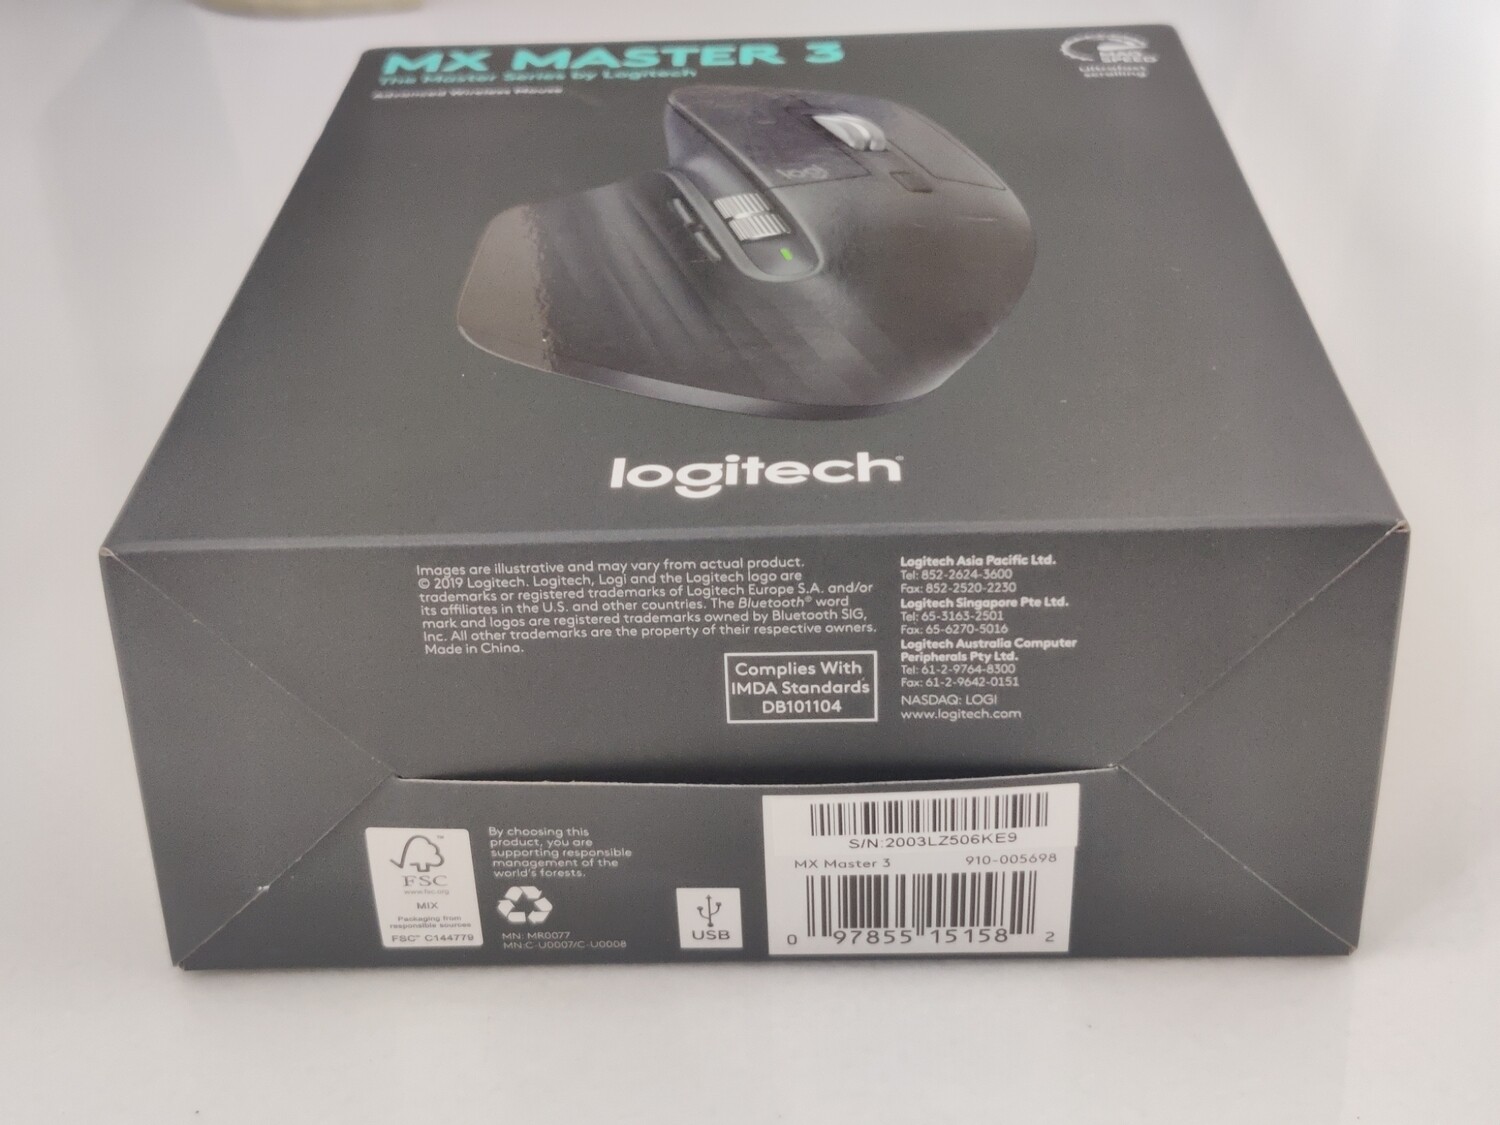 Logitech MX Master 3 Mouse - Rs.6950